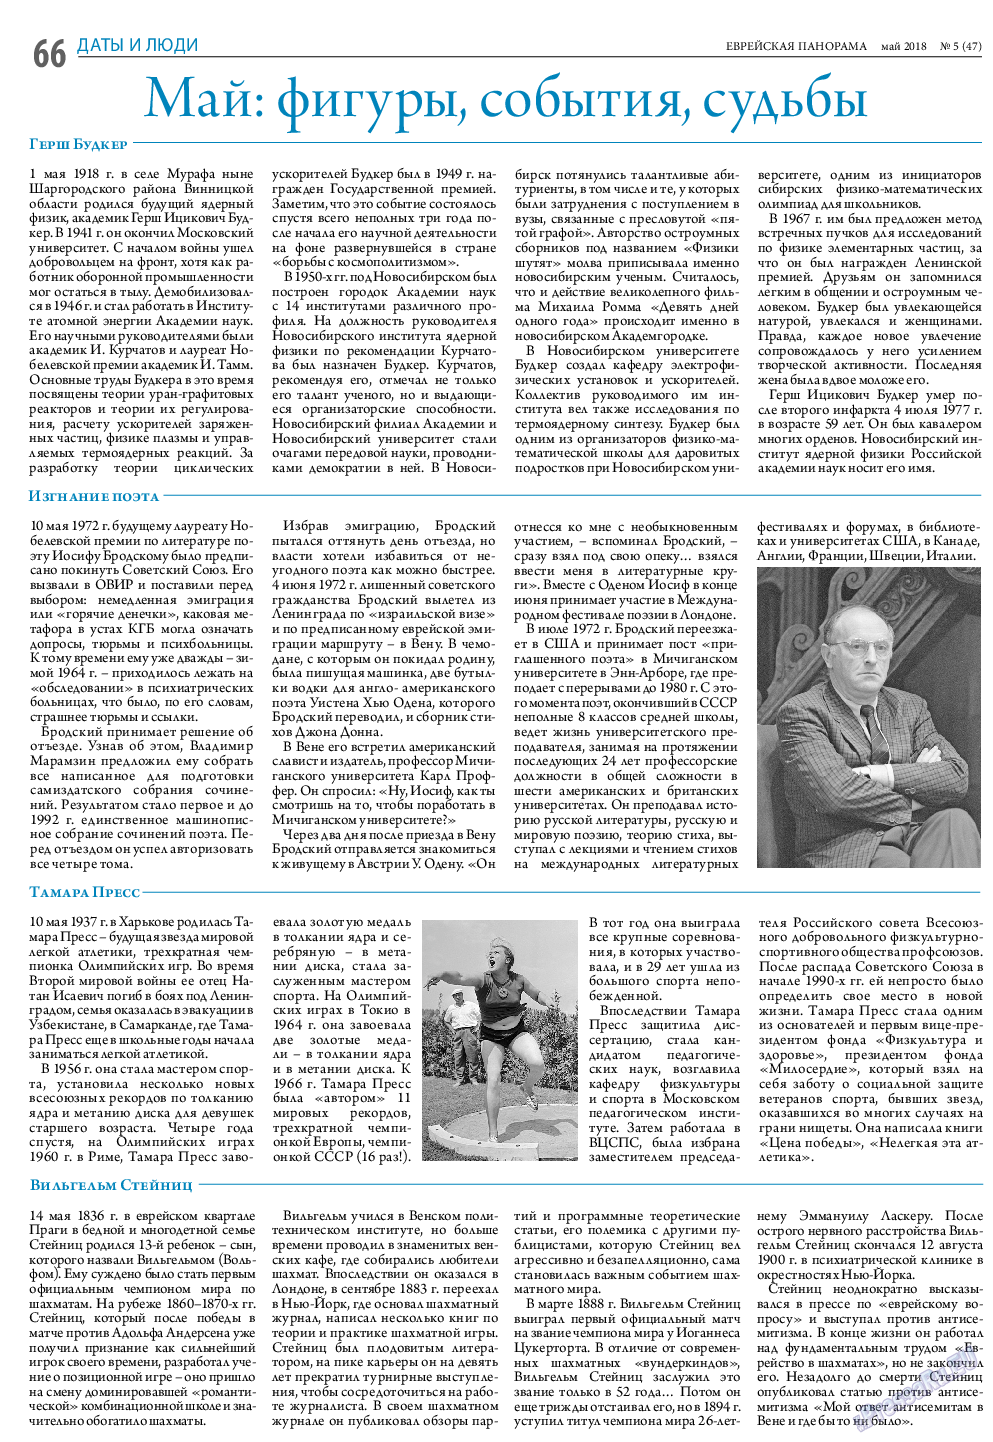 Еврейская панорама, газета. 2018 №5 стр.66